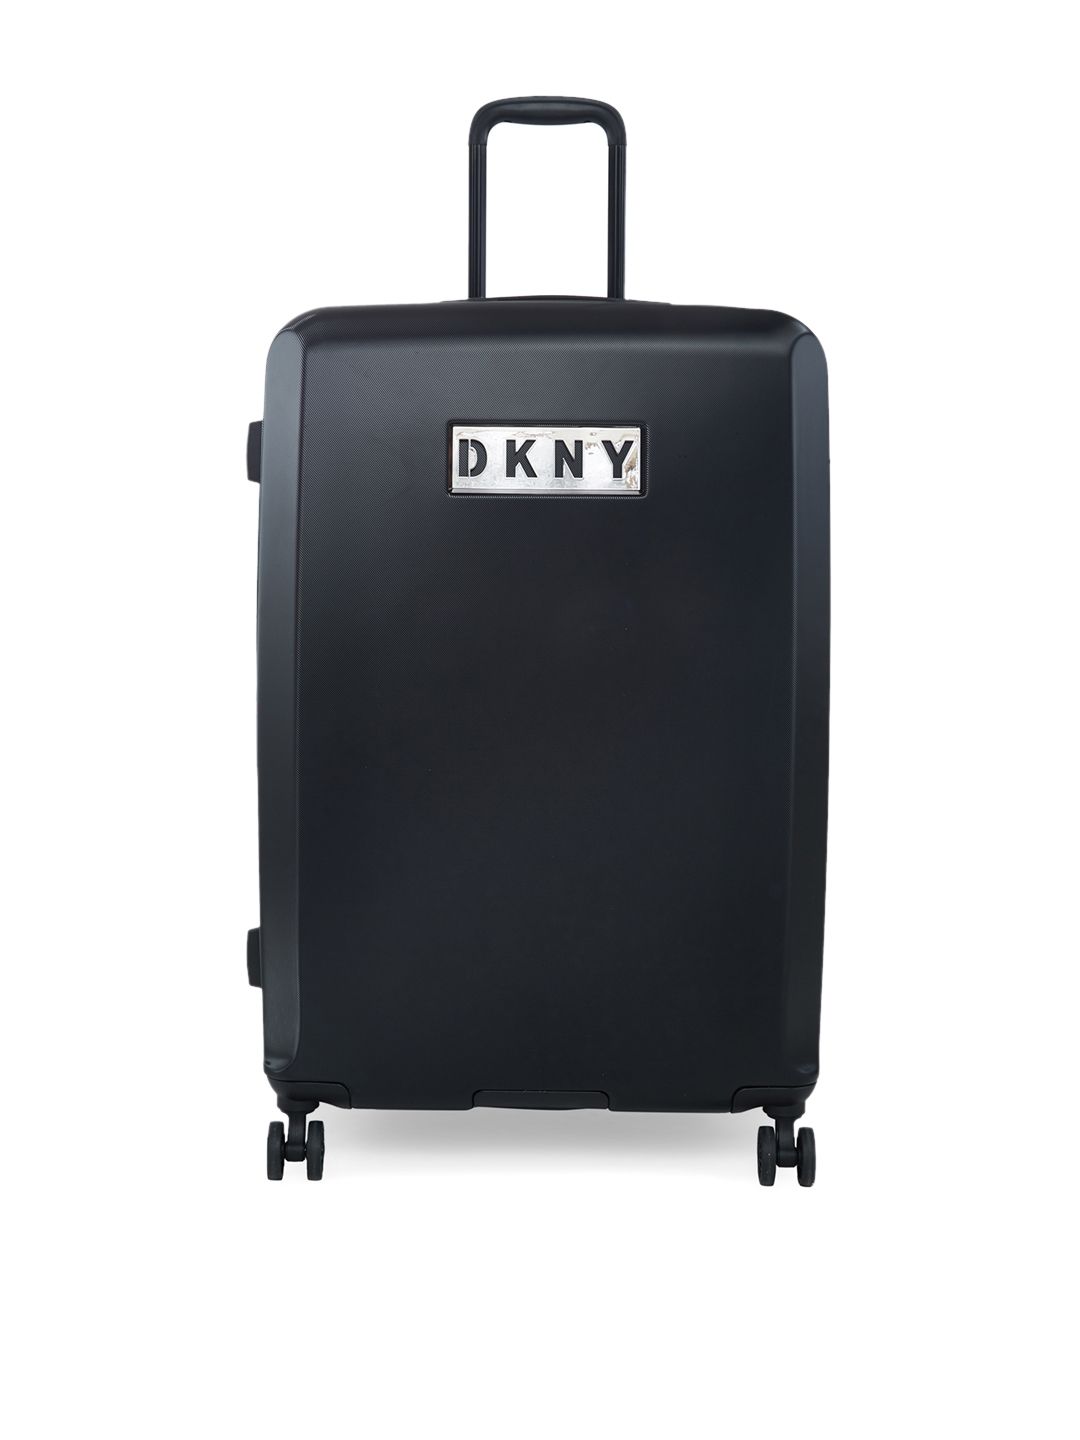 DKNY Alchemy Range Black Hard Large Suitcase Price in India